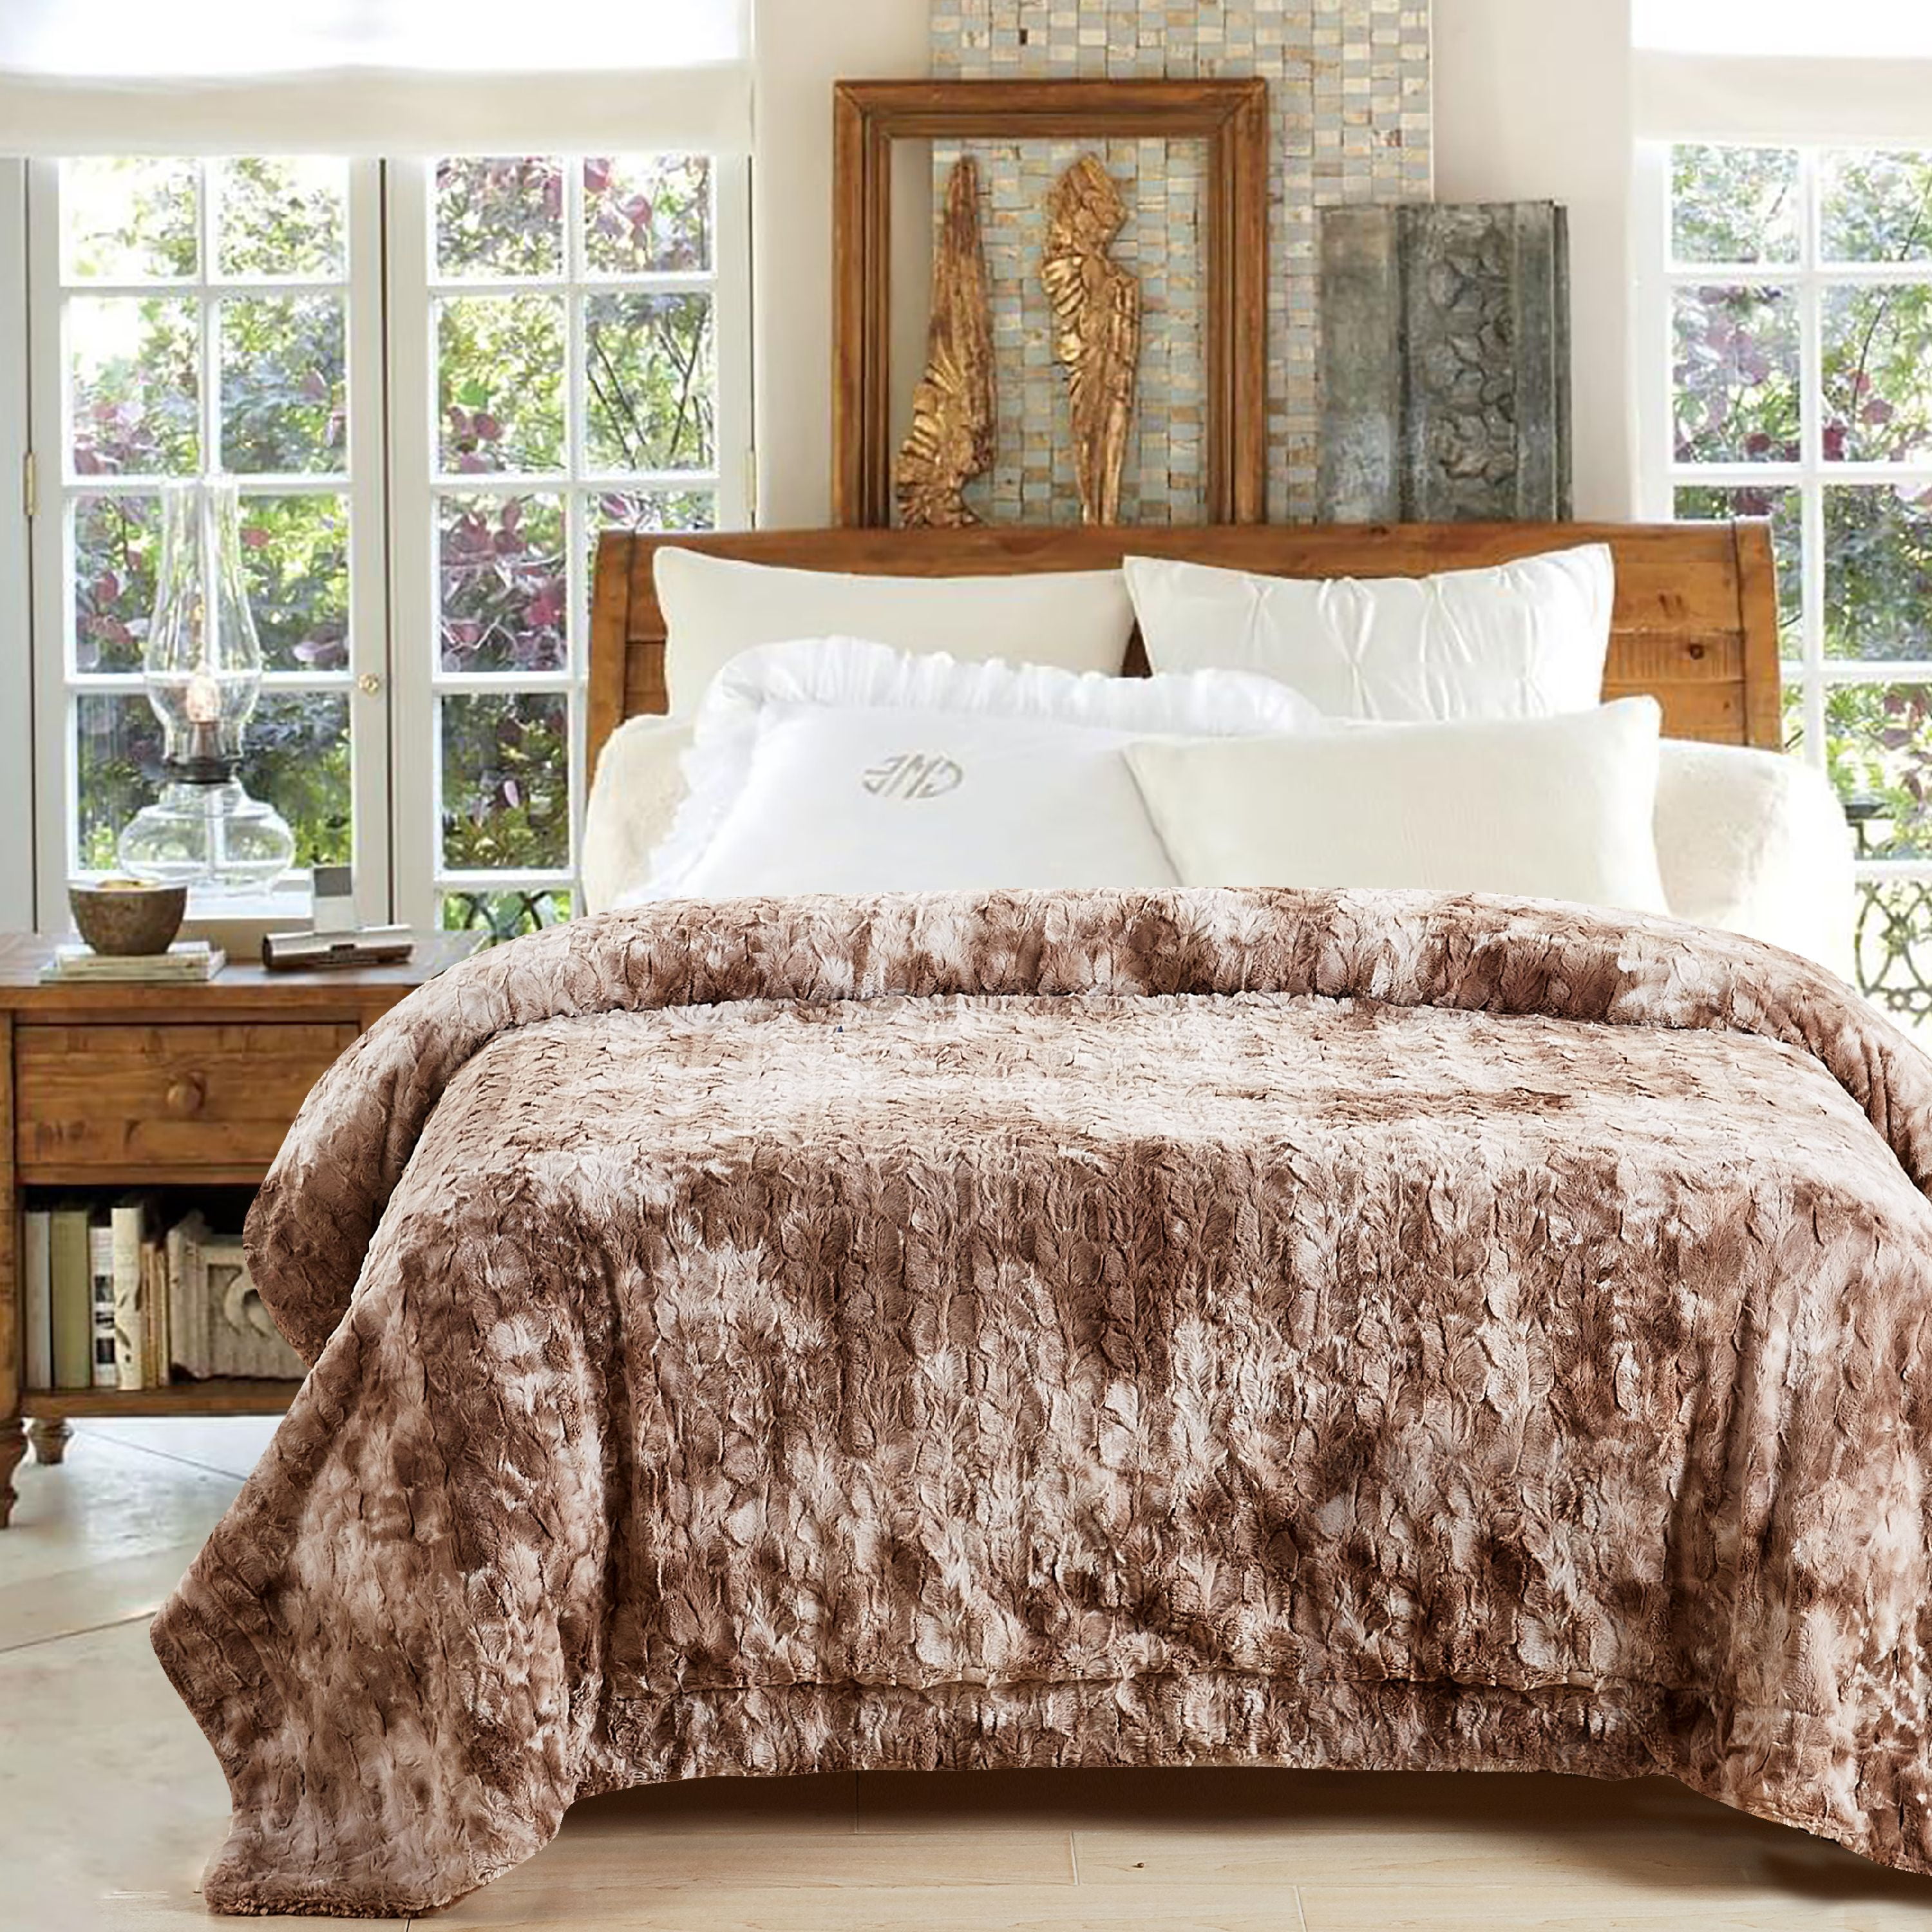 Chanasya Faux Fur Bed Blanket | Super Soft Fuzzy Light Weight 